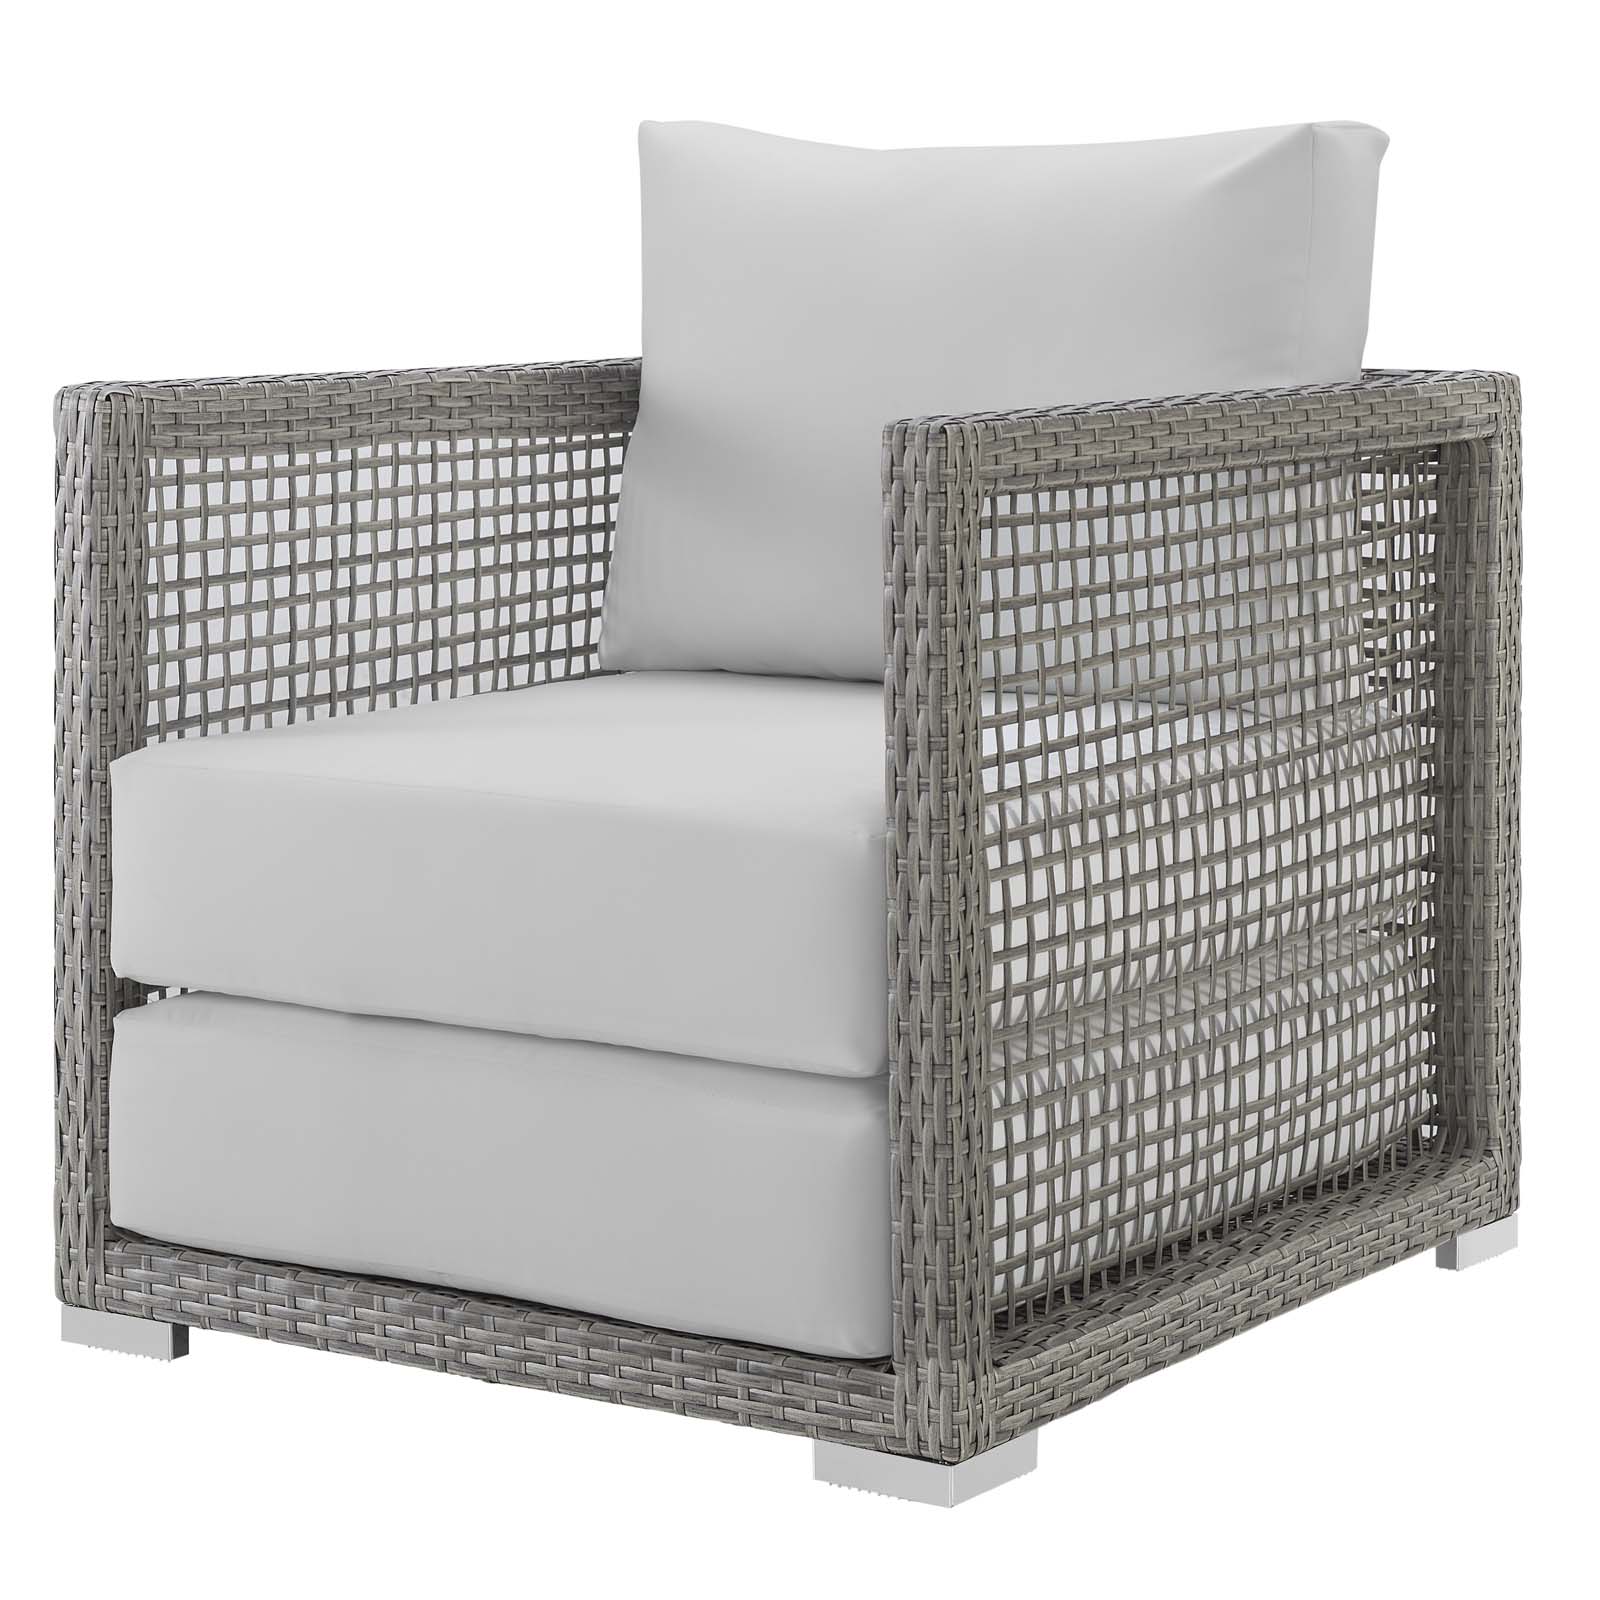 Modern Contemporary Urban Design Outdoor Patio Balcony Garden Furniture Lounge Chair Armchair, Rattan Wicker, Grey Gray White - image 1 of 6